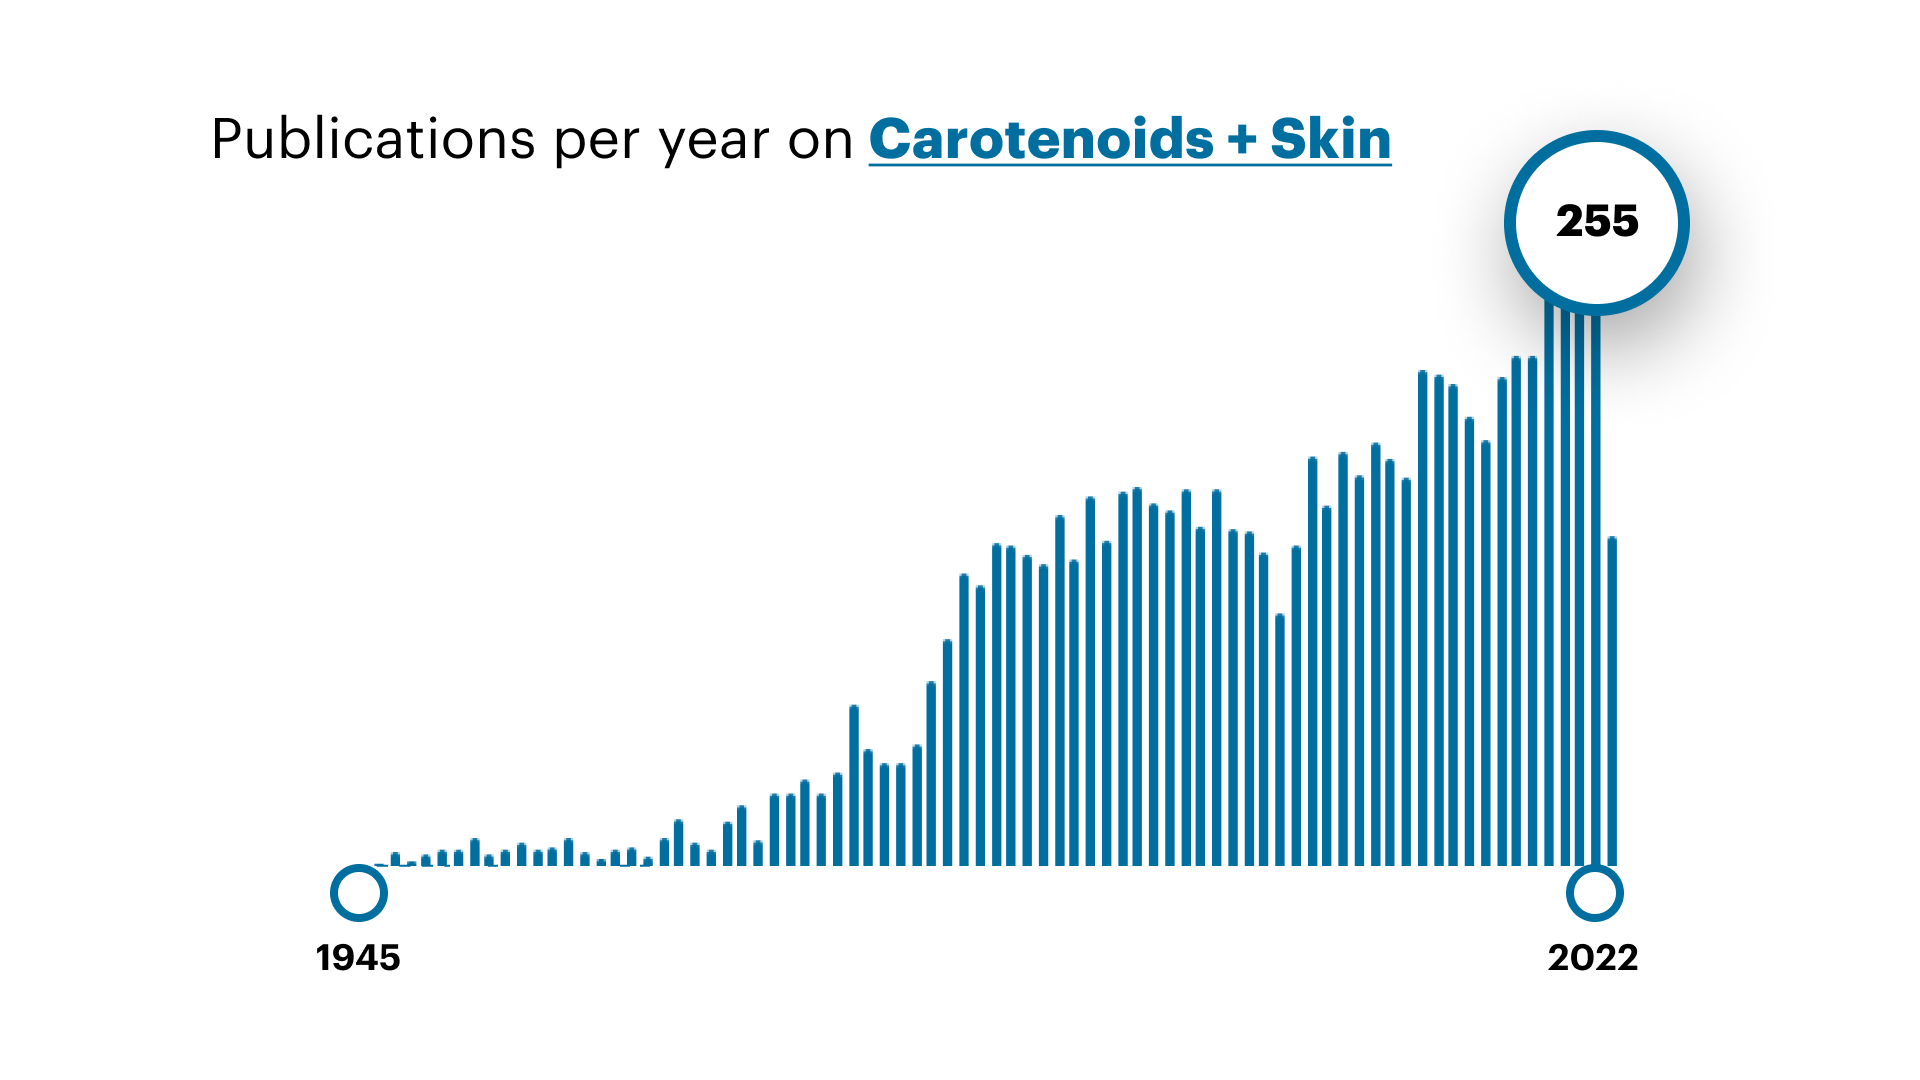 Publications per year on carotenoids + skin